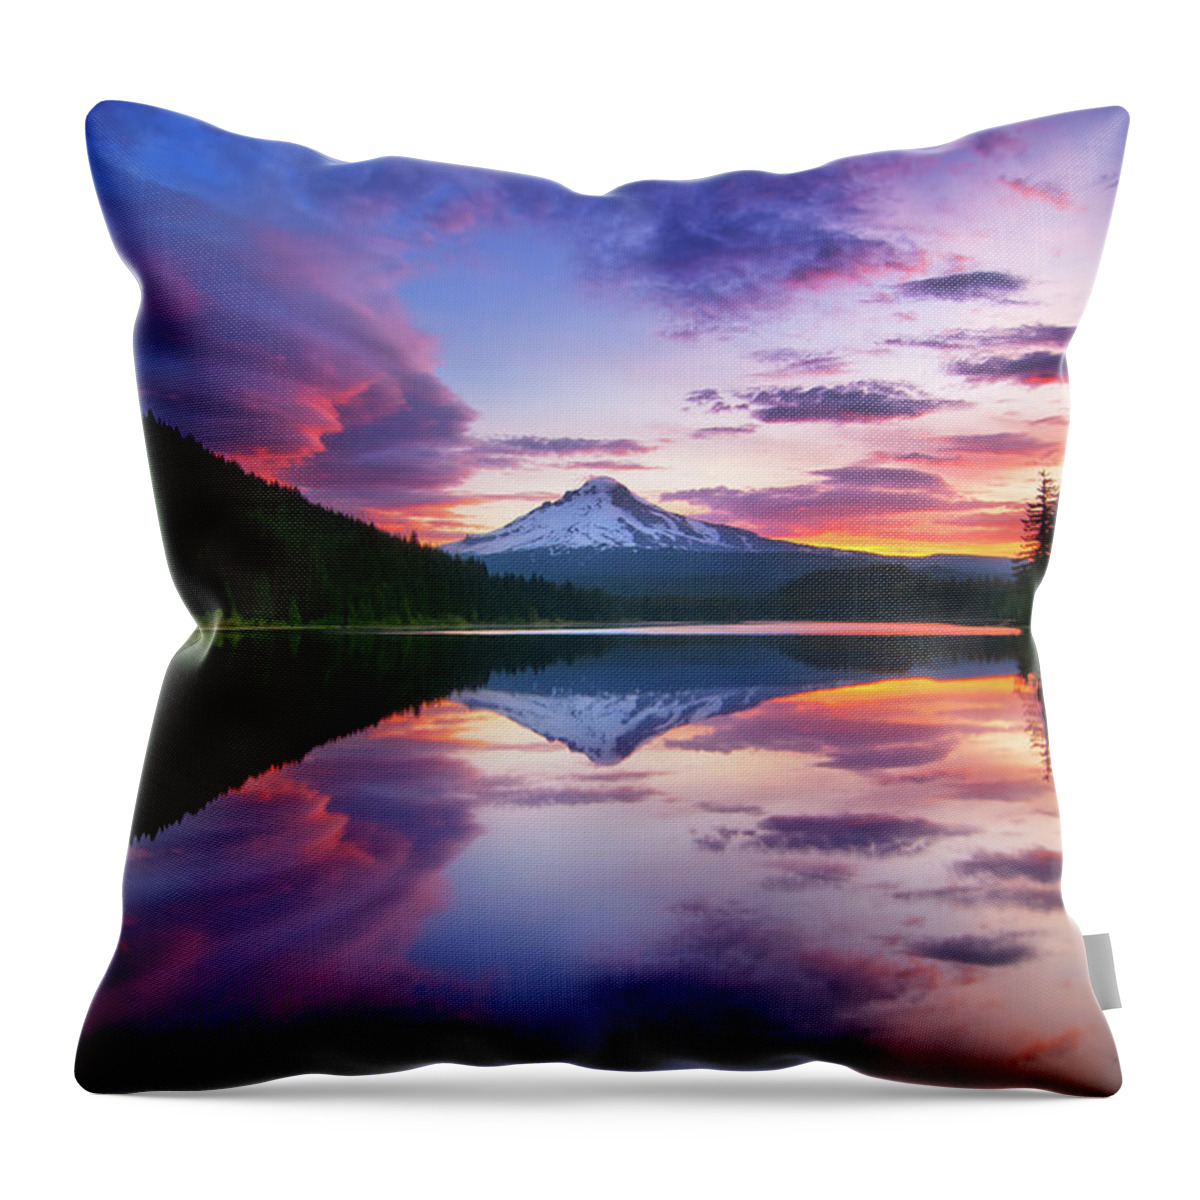 Trillium Lake Throw Pillow featuring the photograph Trillium Lake Sunrise by Darren White